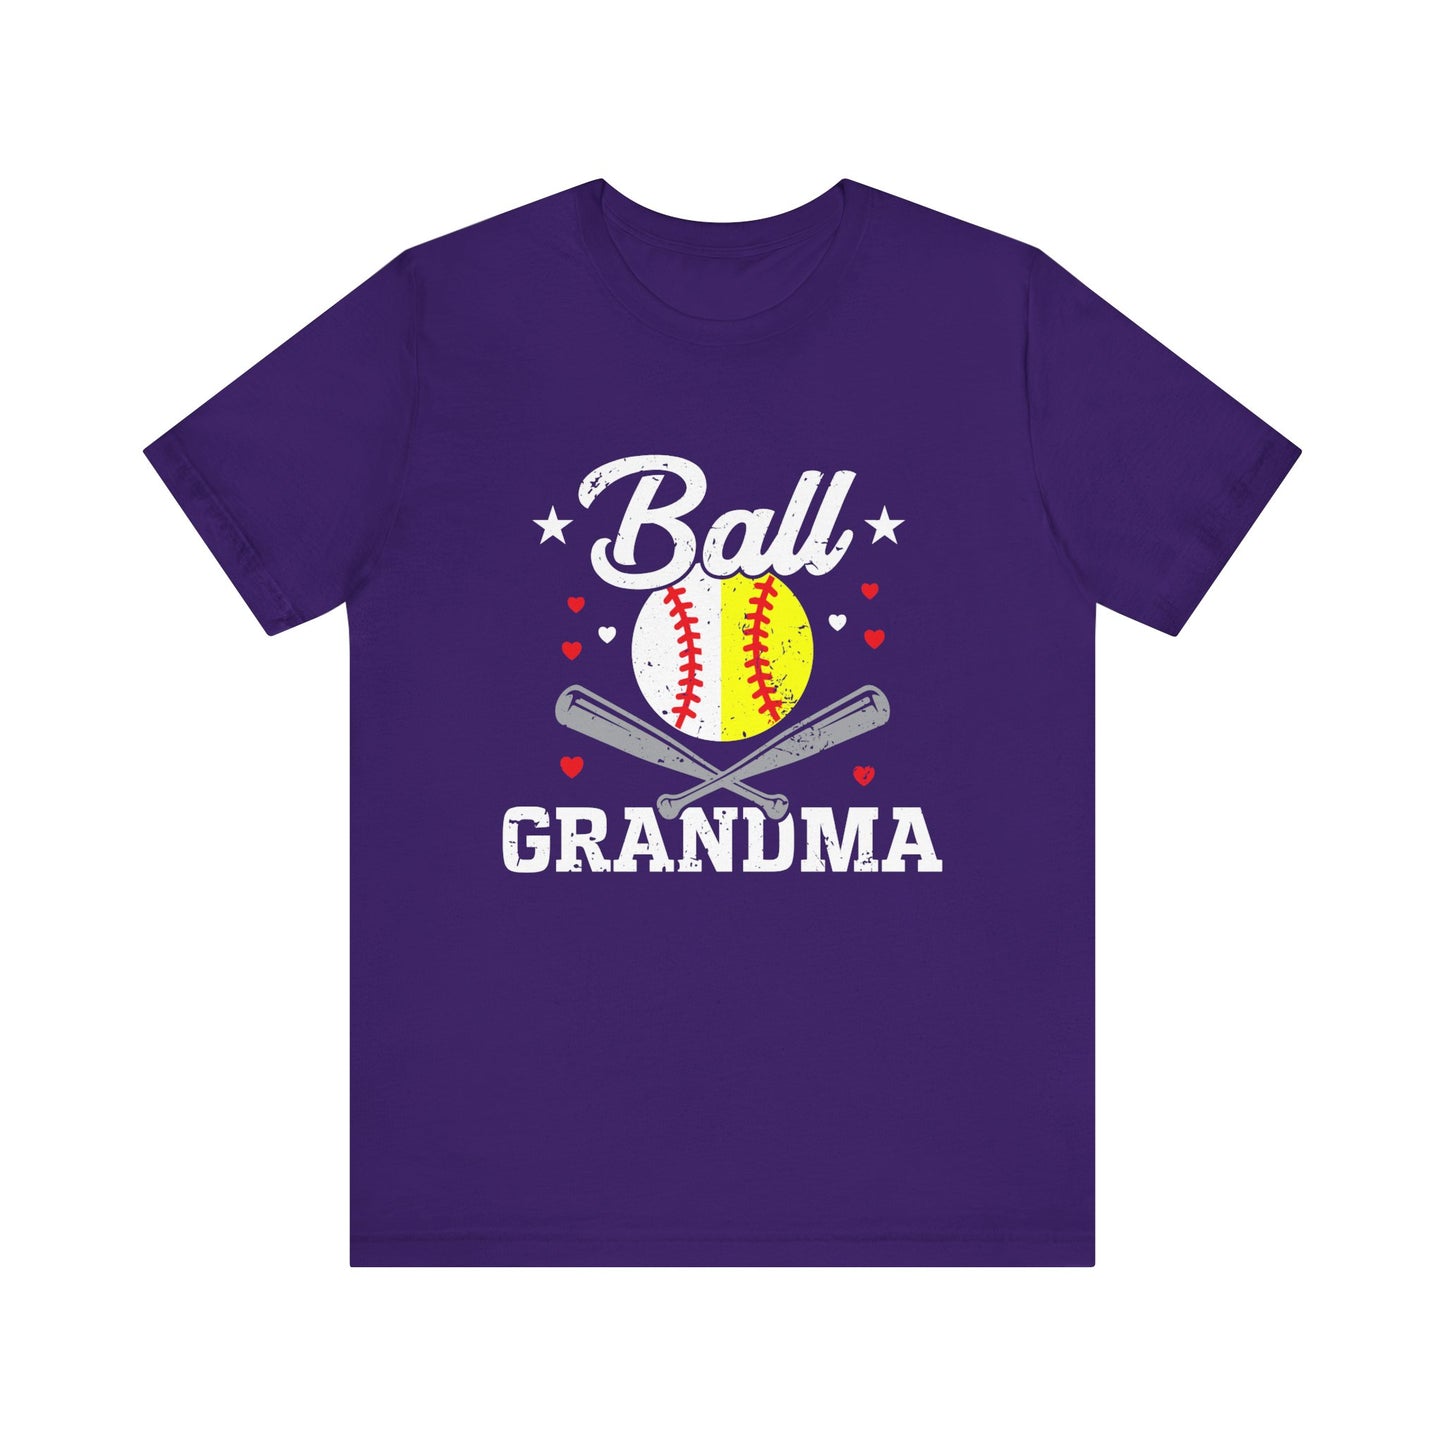 Ball Grandma Baseball and Softball Short Sleeve Tshirt